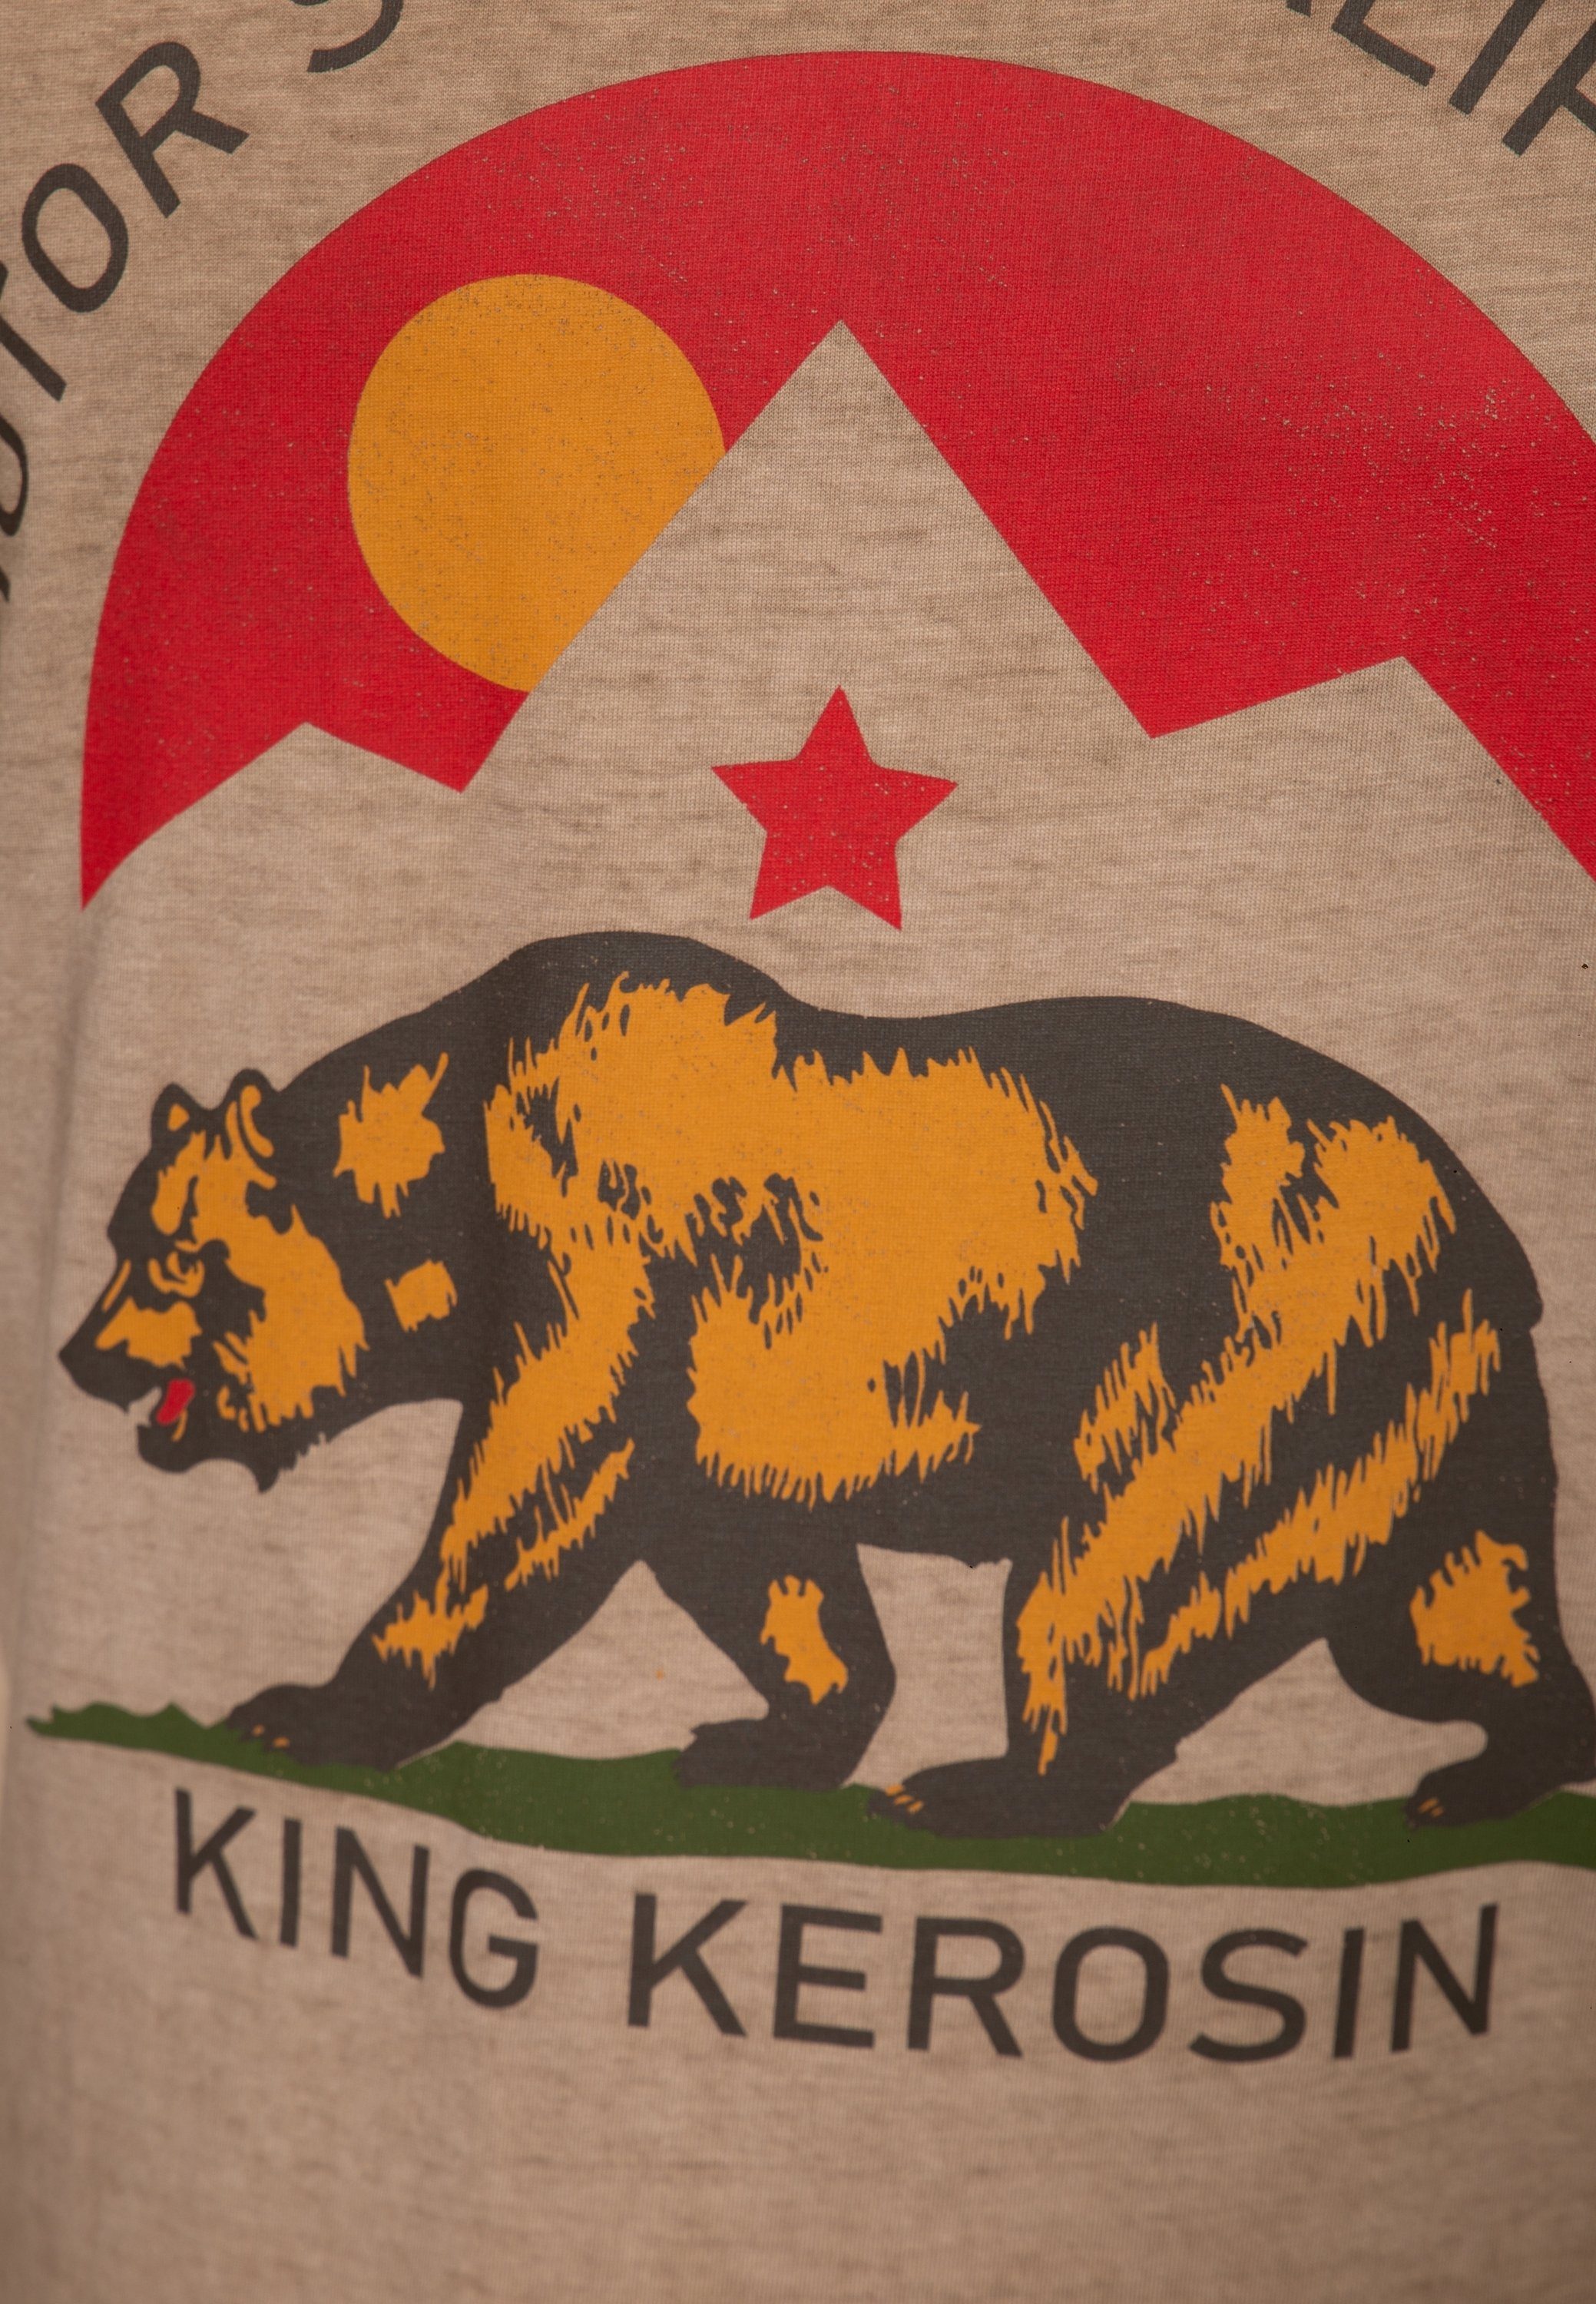 Herren Shirts KingKerosin T-Shirt Motor State CA mit Frontprint